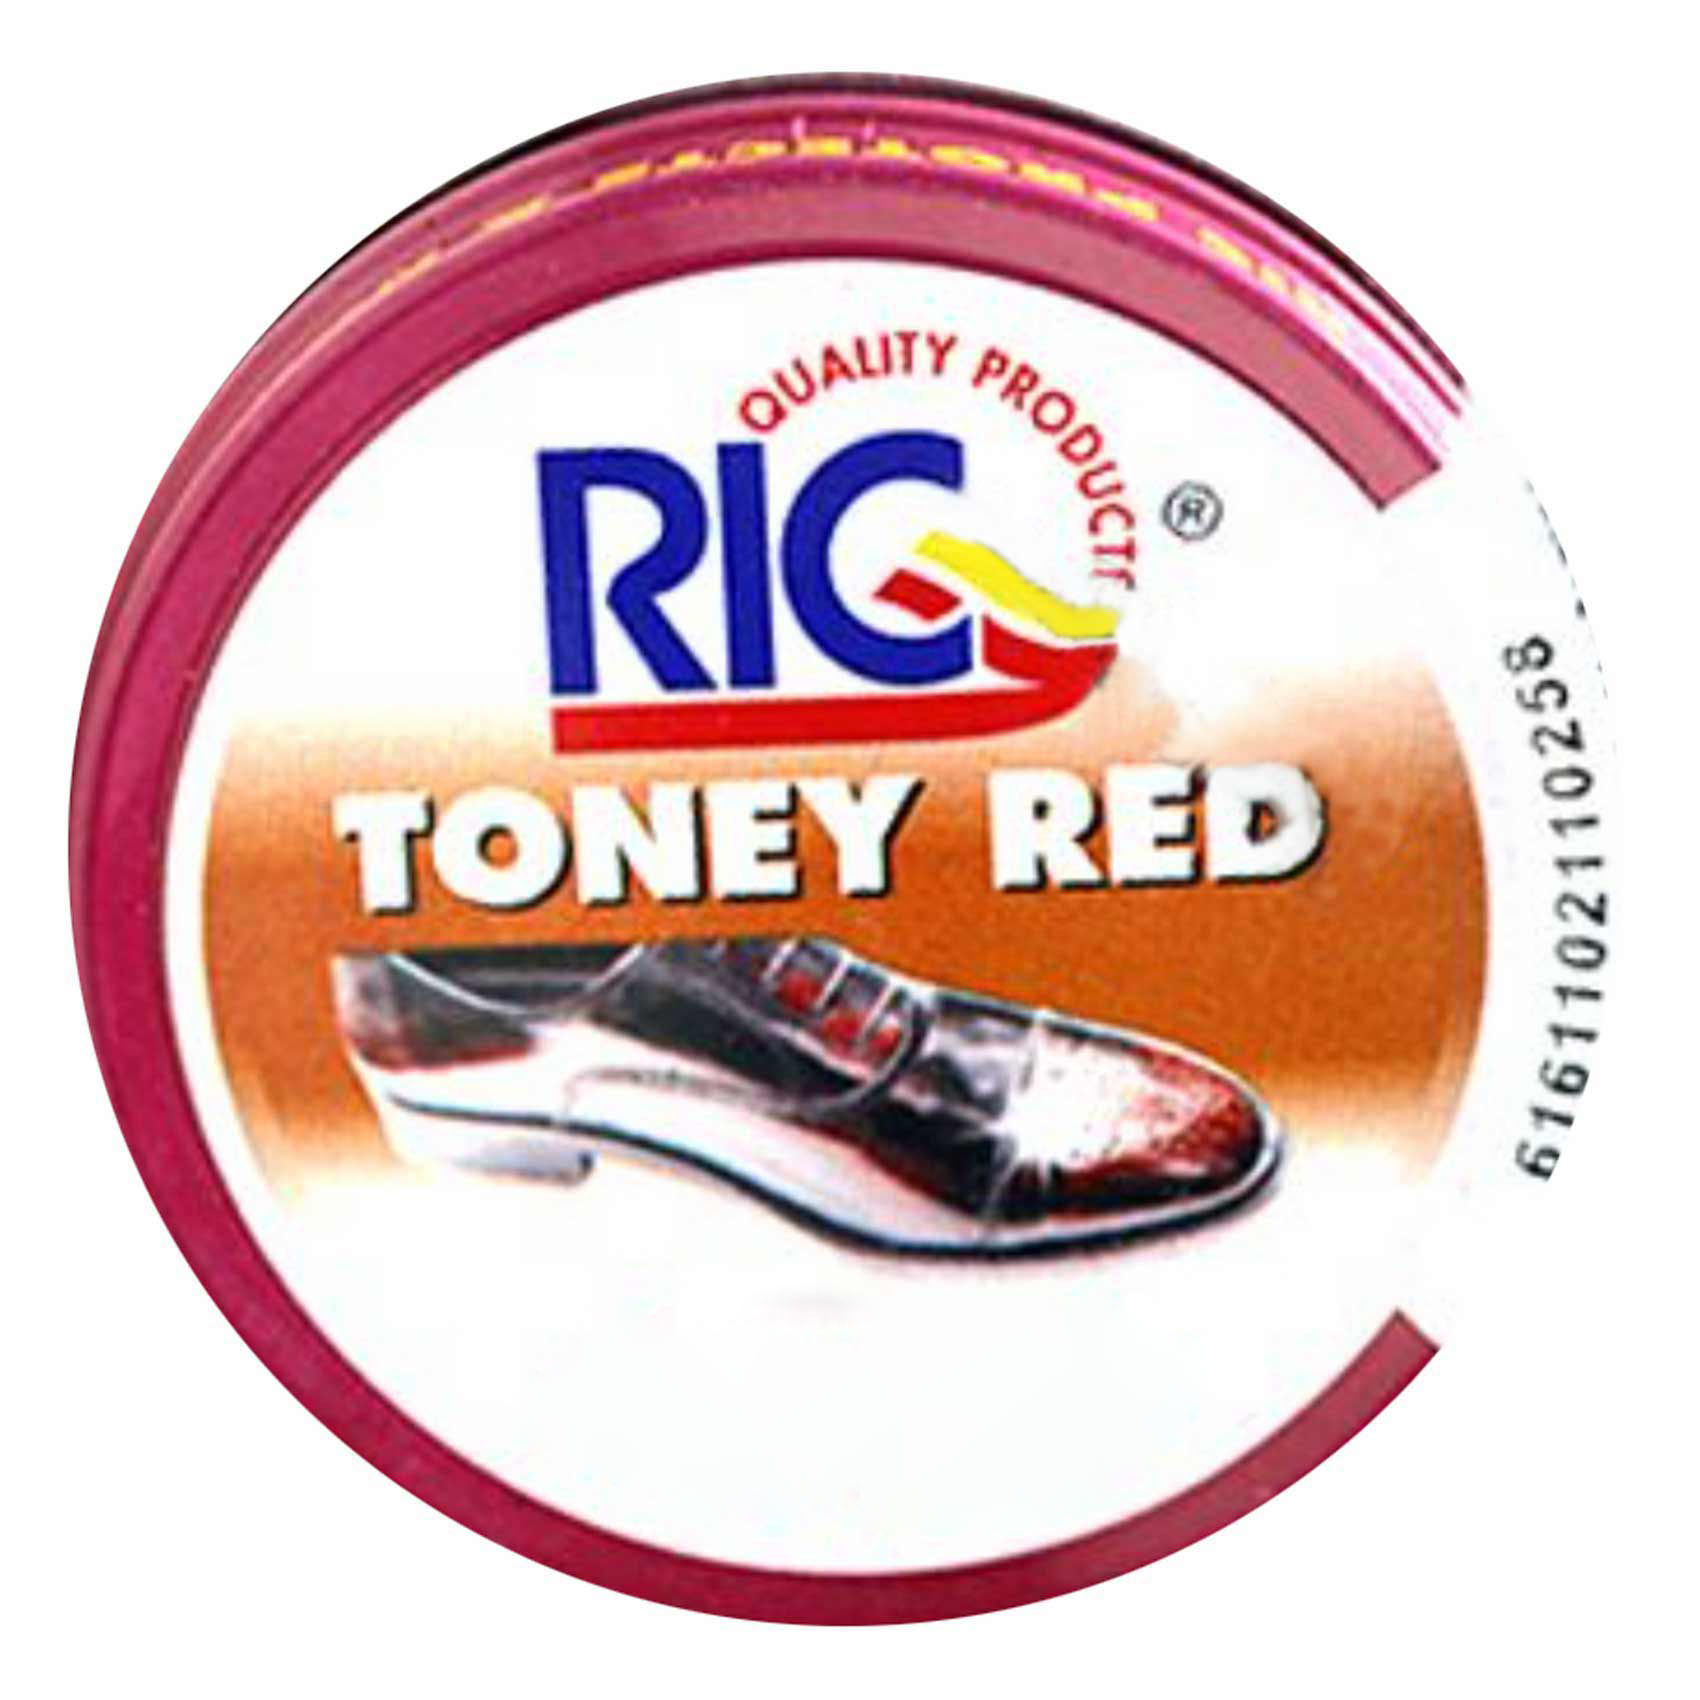 Ric Toney Red Shoe Polish 100ml